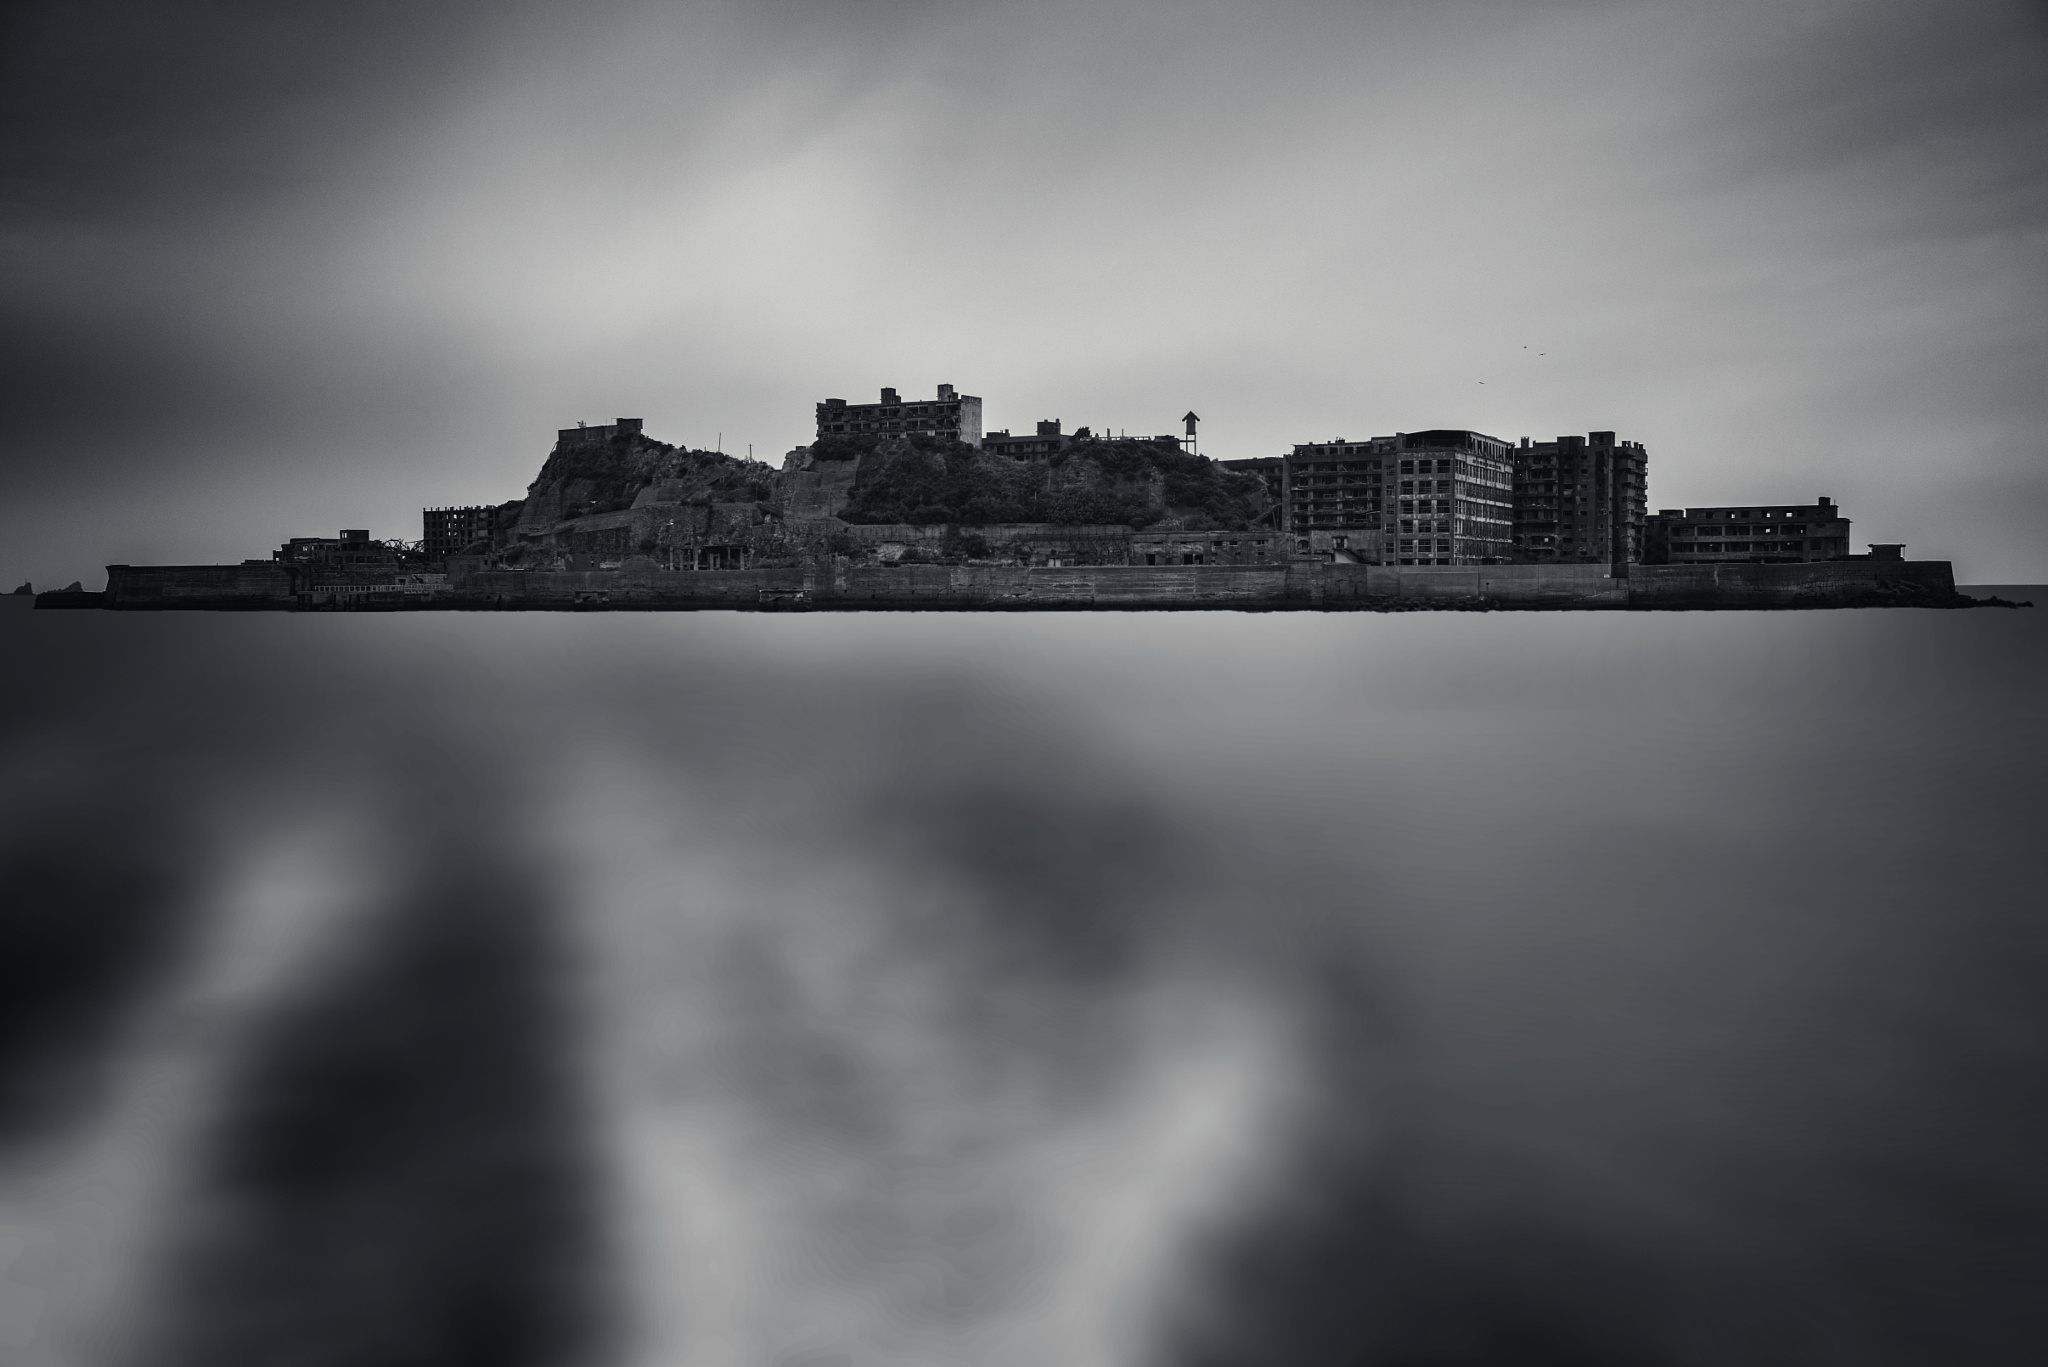 25 Photos of Battleship Island: The Eerie, Deserted Island from the James Bond Film Skyfall